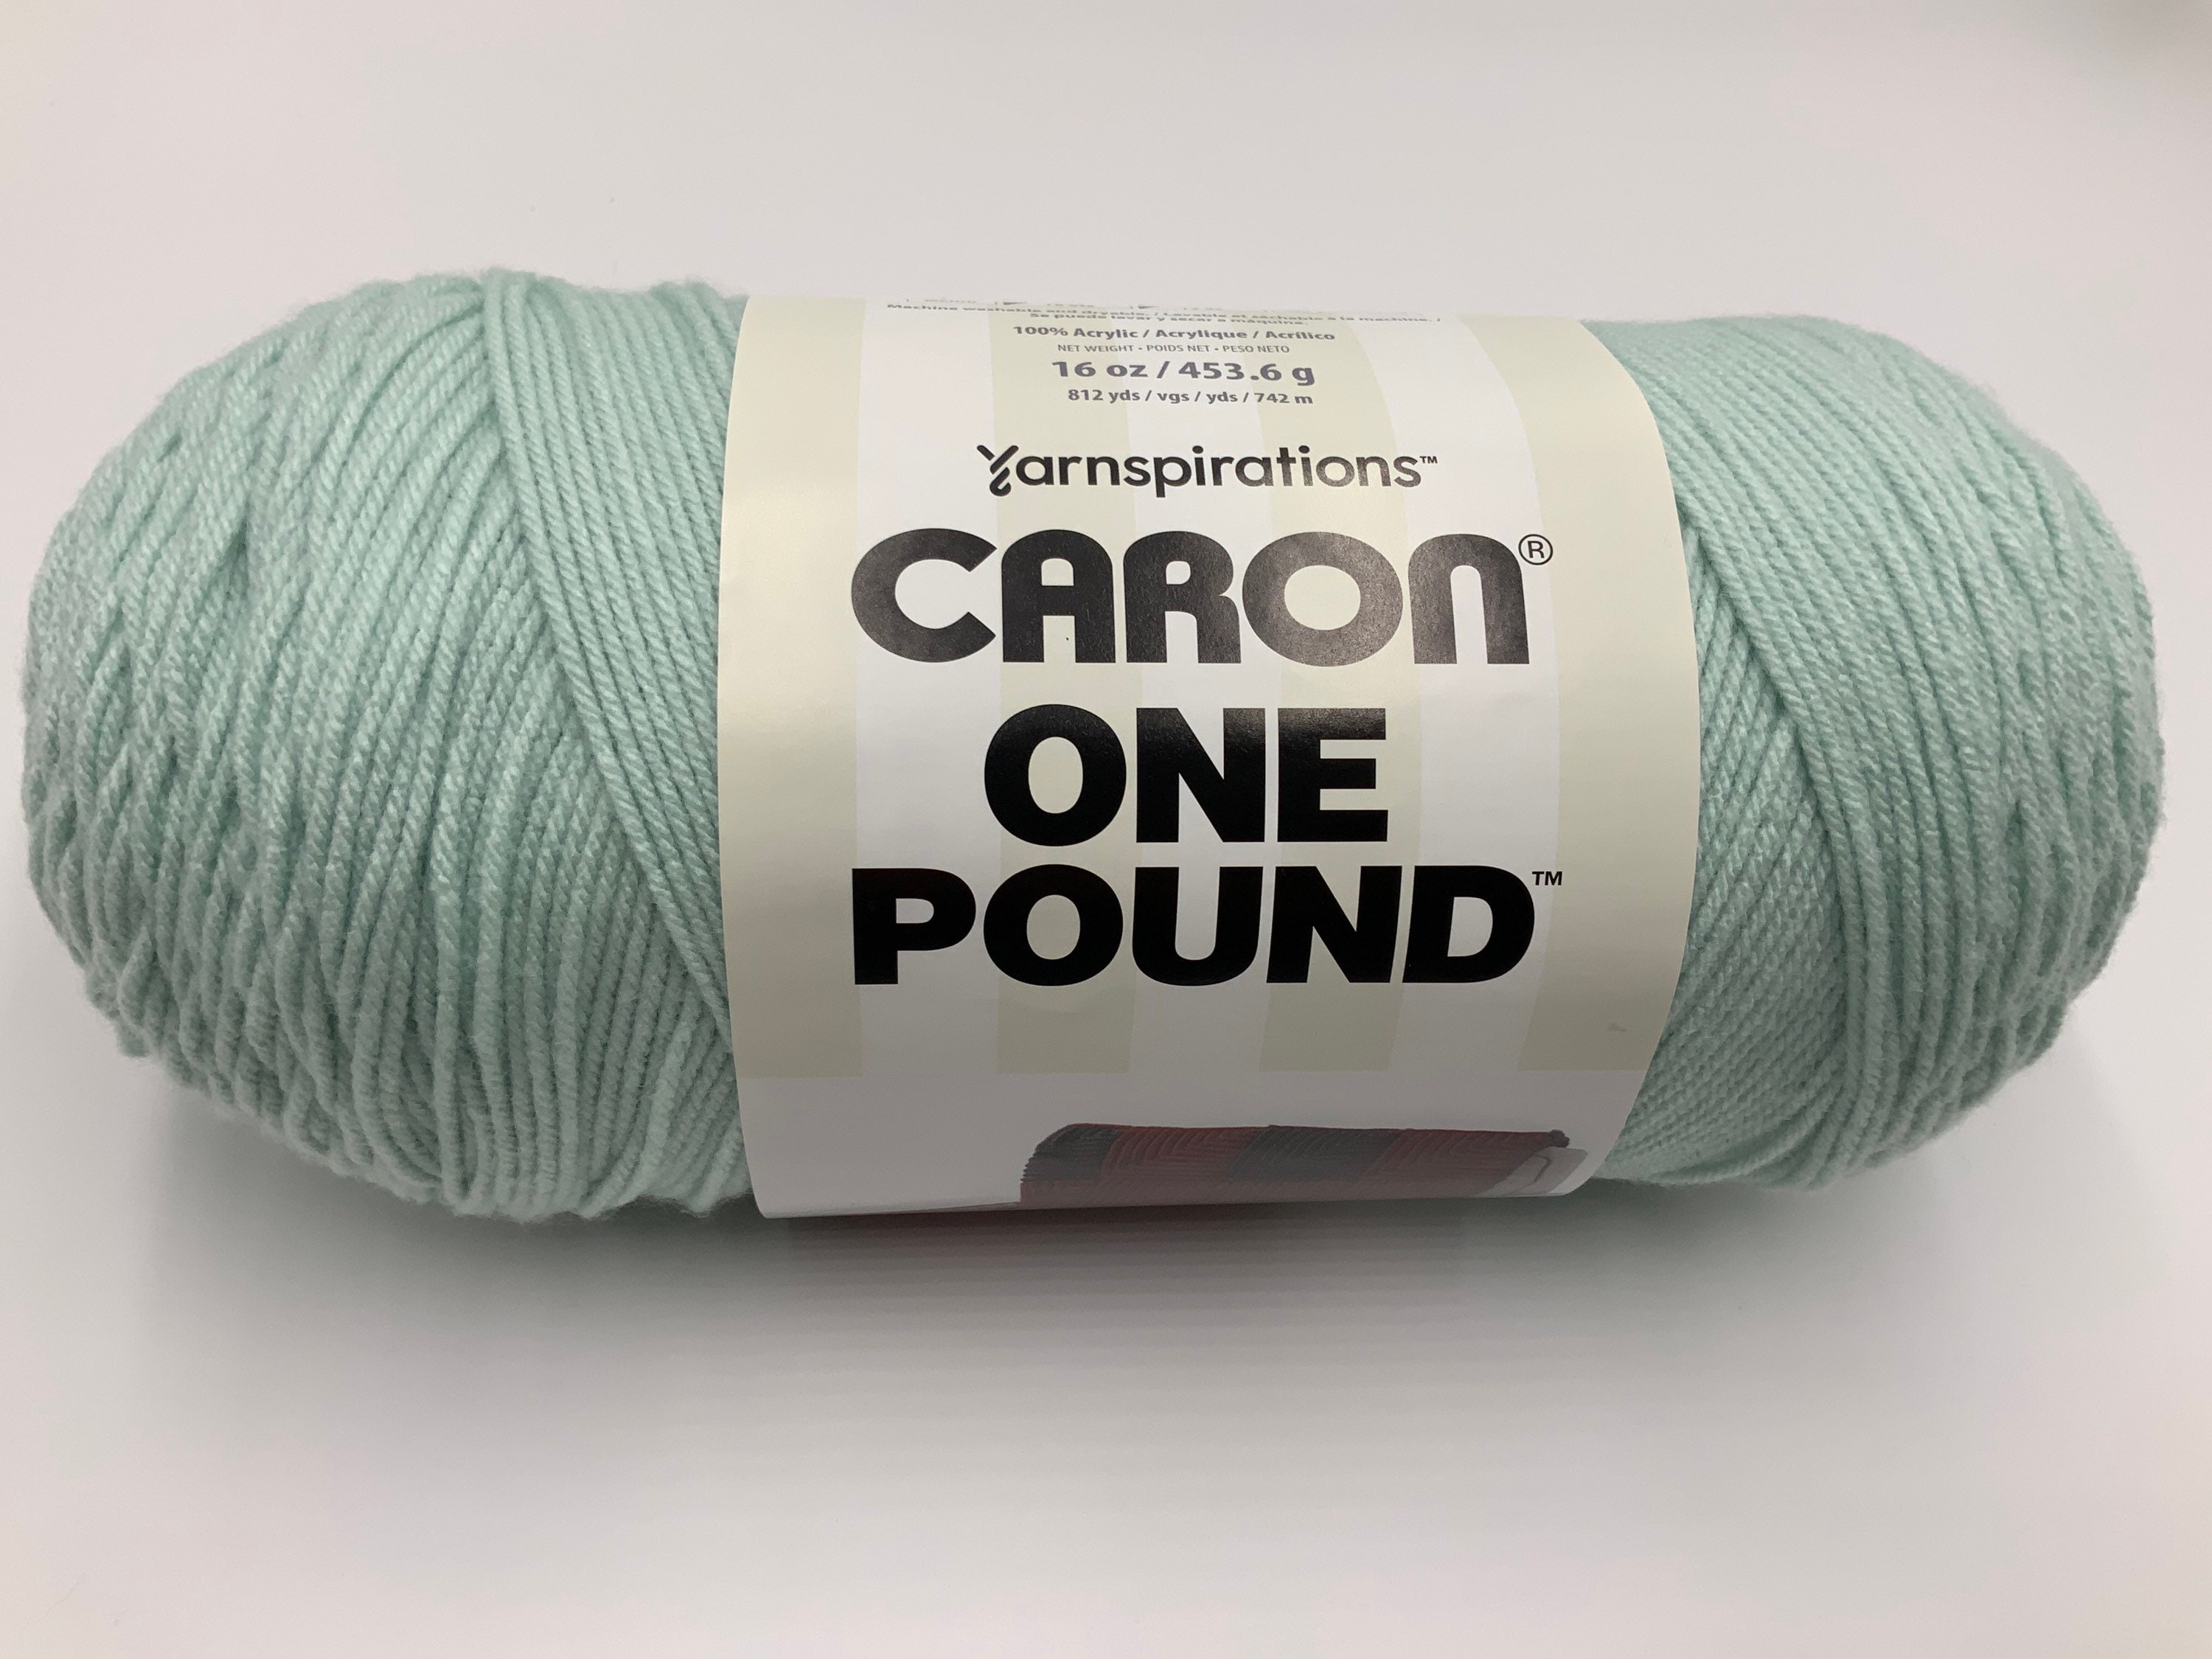 Caron One Pound Yarn, Medium 4 / 16 Oz / 453.6 G Pale Green 